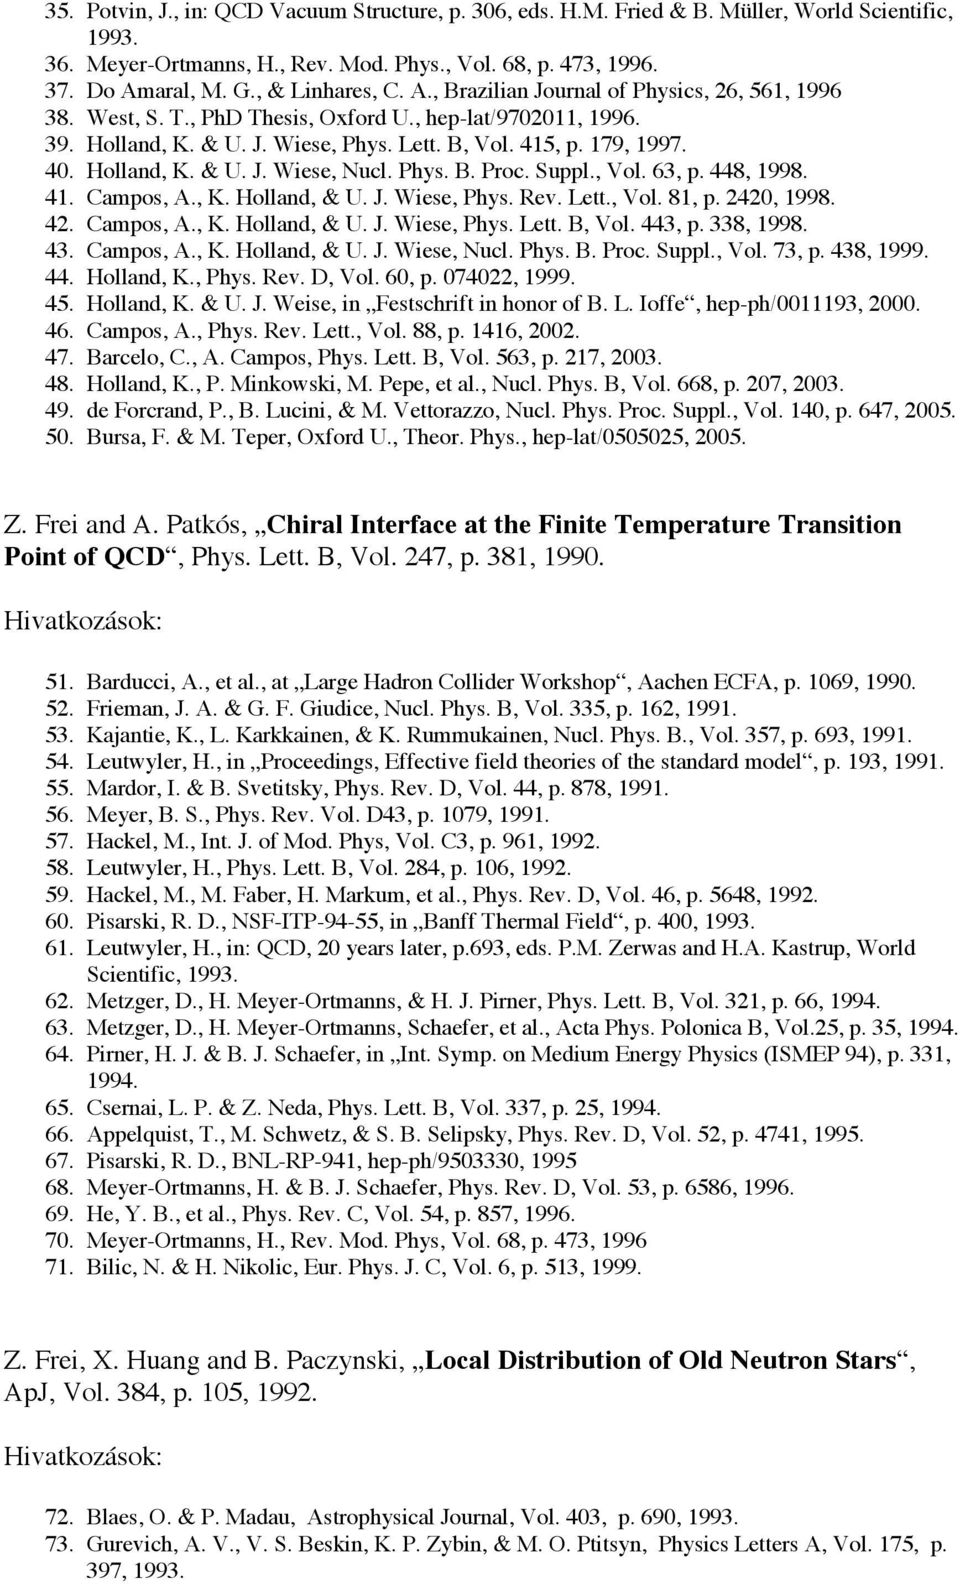 40. Holland, K. & U. J. Wiese, Nucl. Phys. B. Proc. Suppl., Vol. 63, p. 448, 1998. 41. Campos, A., K. Holland, & U. J. Wiese, Phys. Rev. Lett., Vol. 81, p. 2420, 1998. 42. Campos, A., K. Holland, & U. J. Wiese, Phys. Lett. B, Vol.